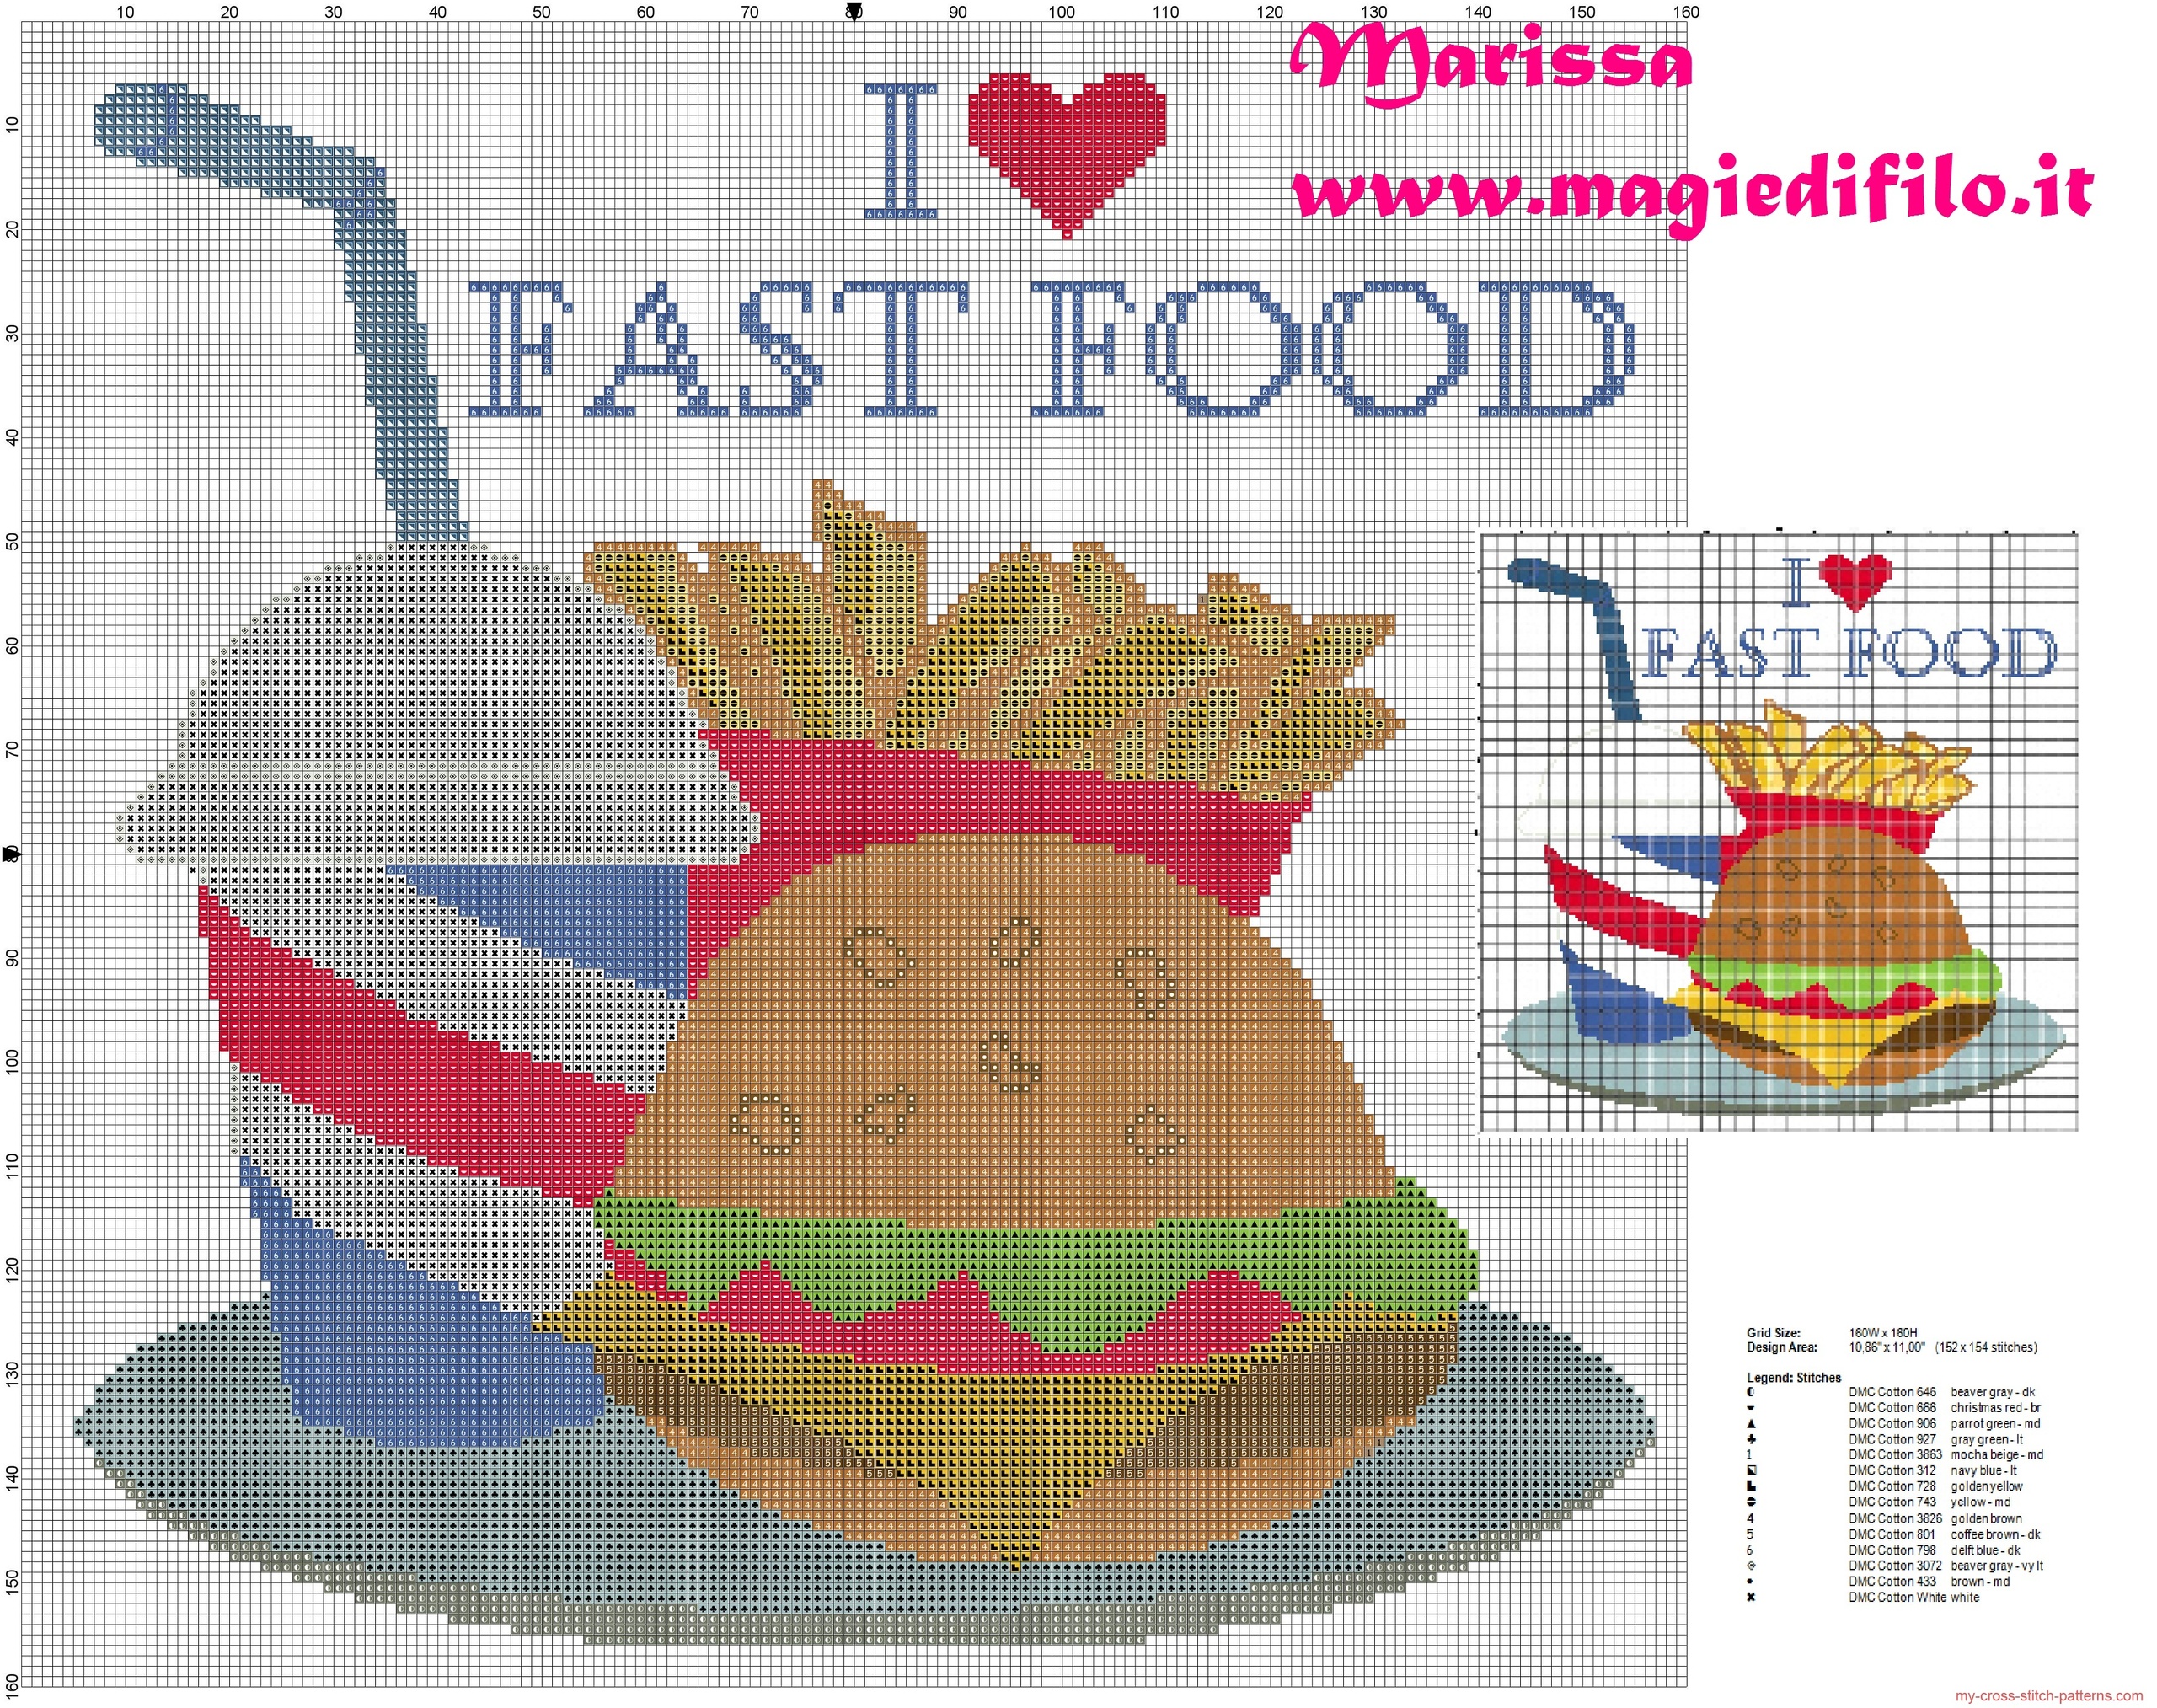 i_love_fast_food